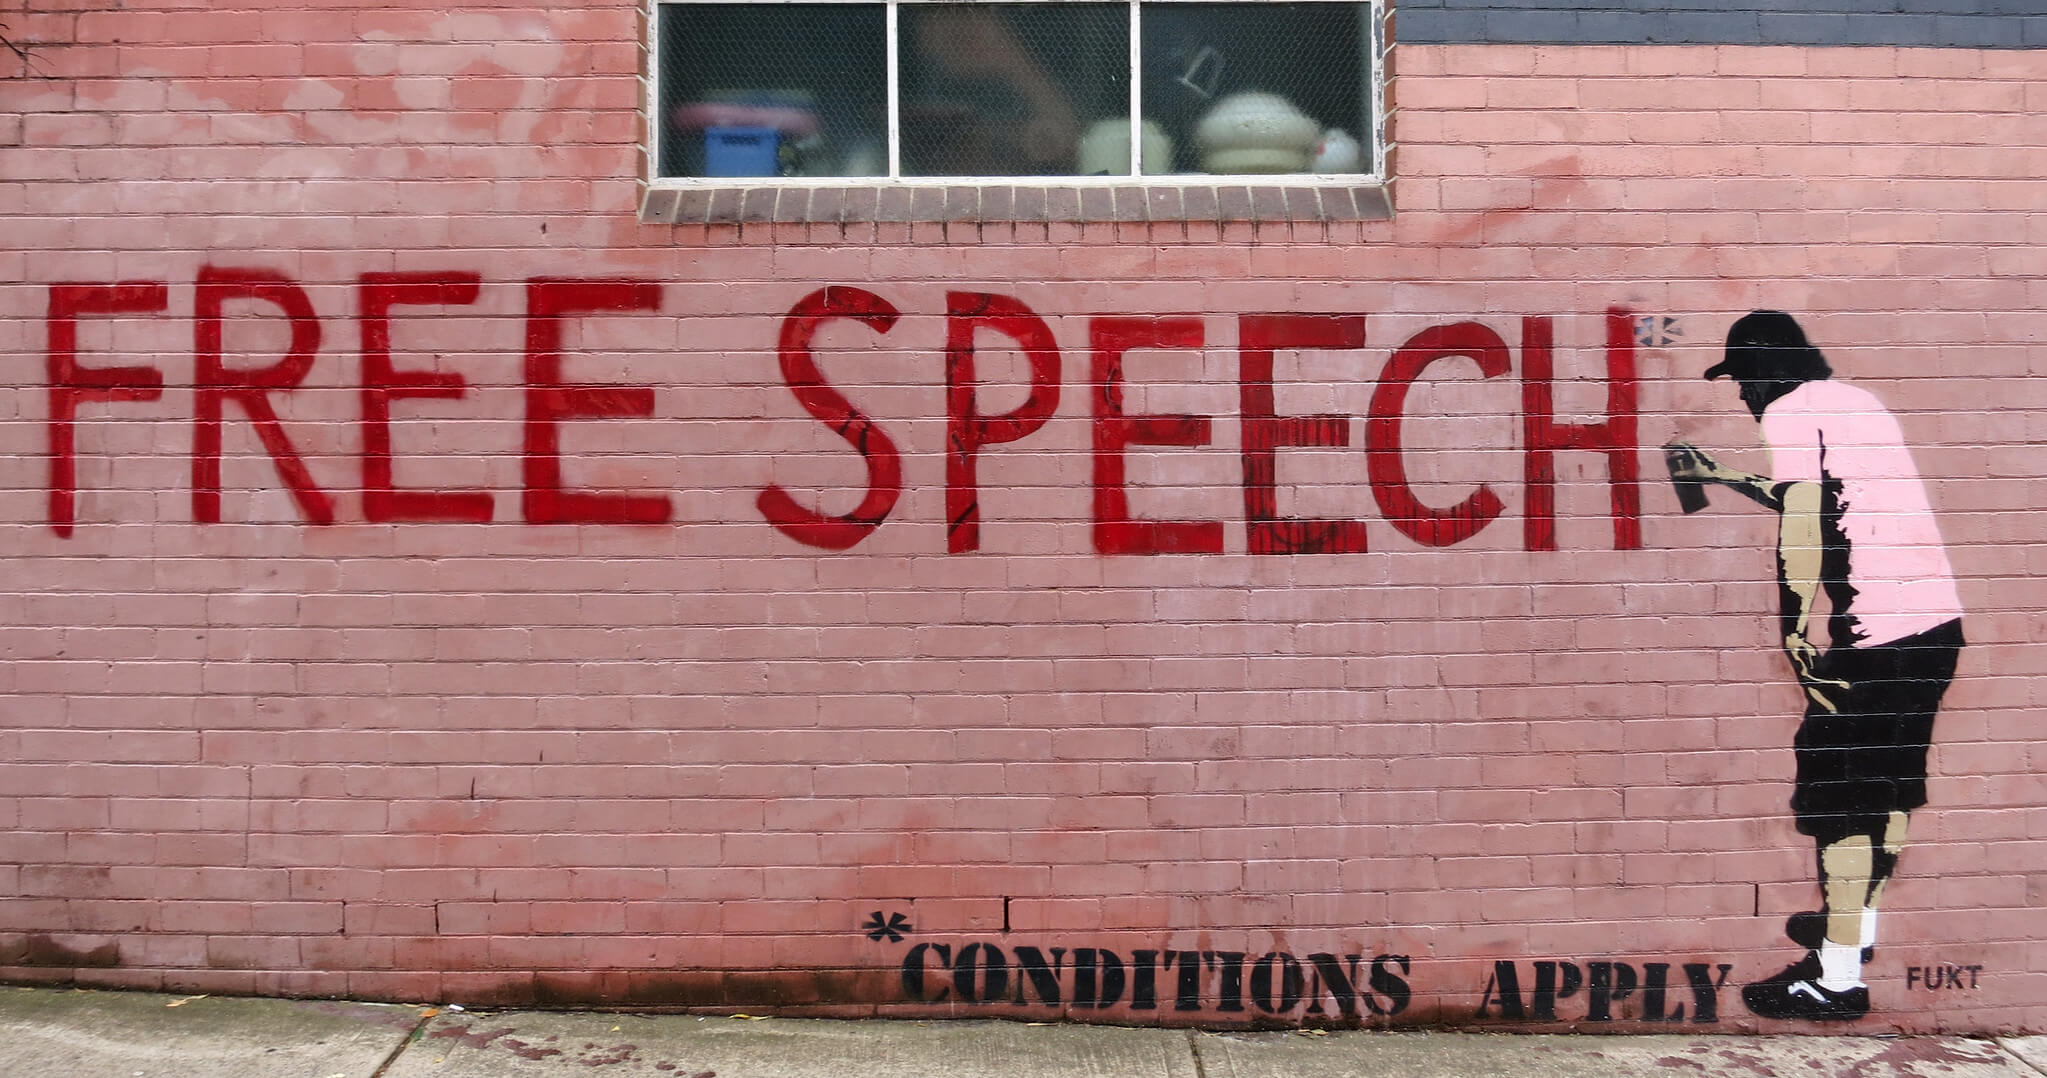 Free Speech * Conditions Apply by Fukt (Photo: Flickr/wiredforlego)